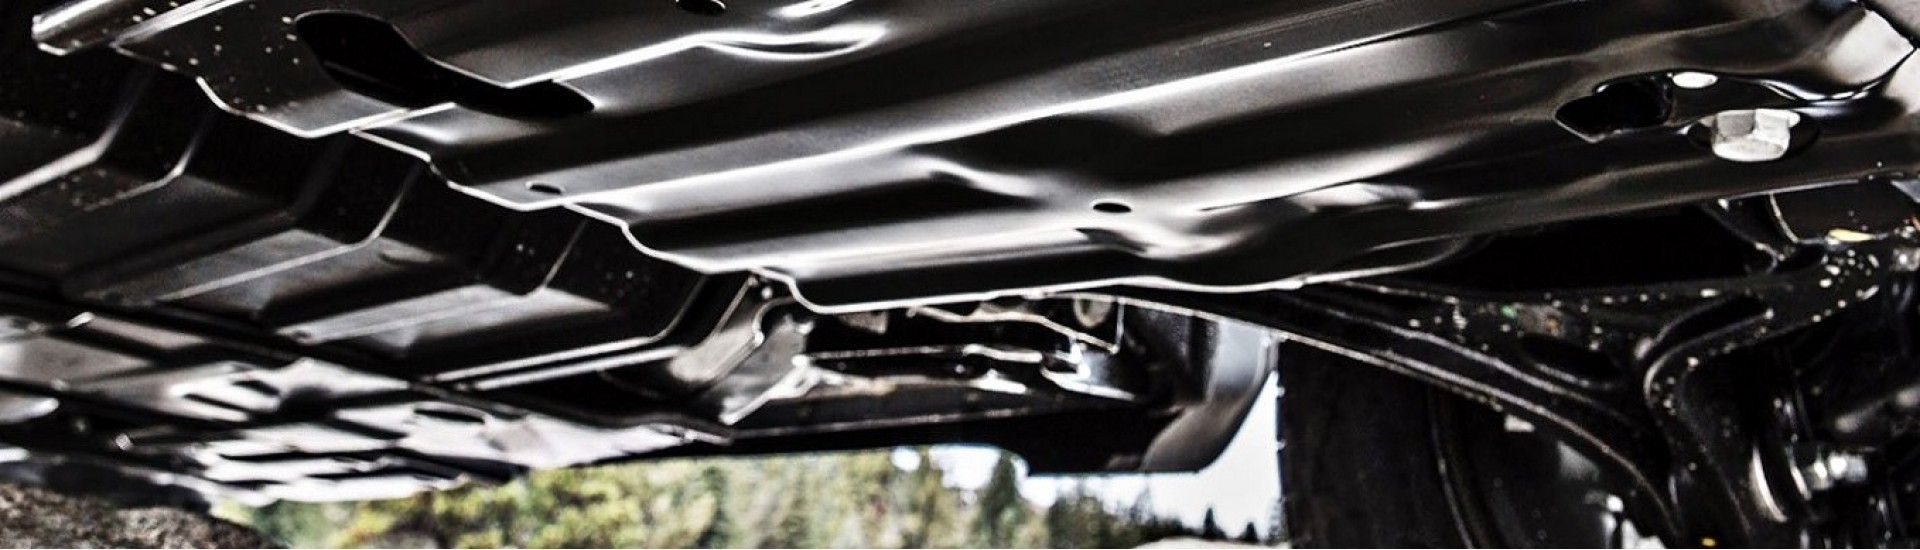 سینی زیر موتور تویوتا یاریس RS 